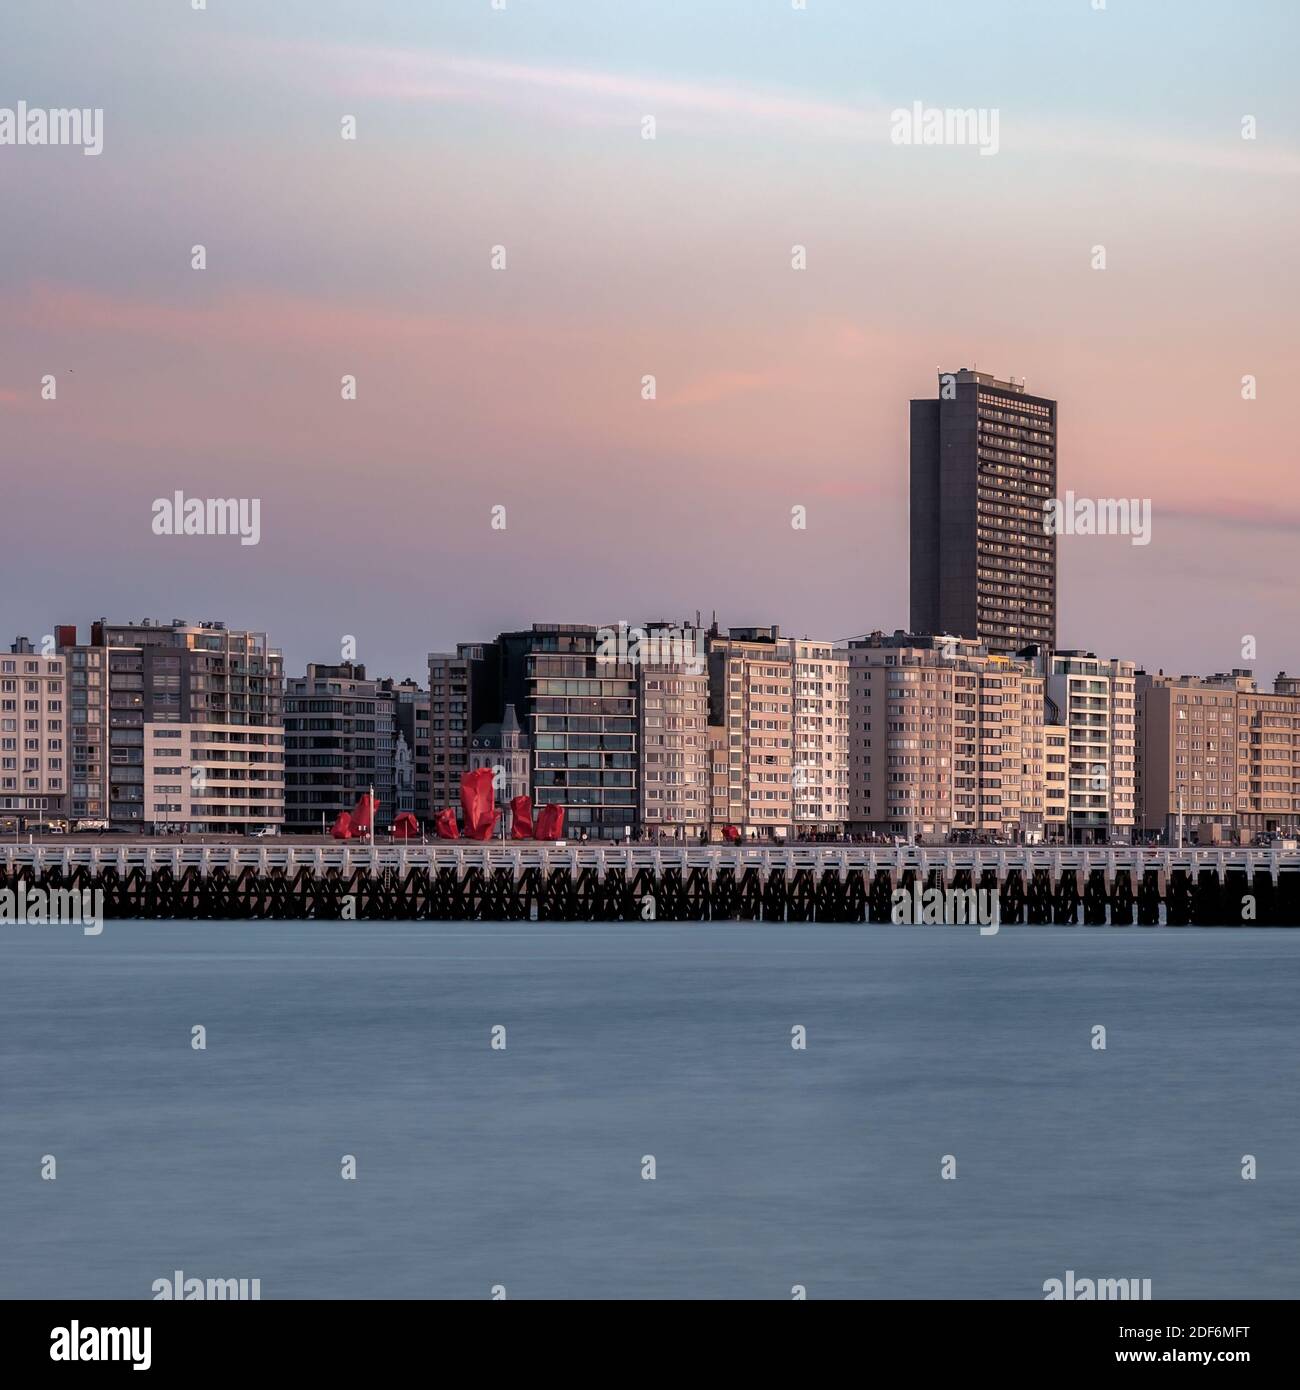 Skyline of Oostende. Long exposure image. Stock Photo